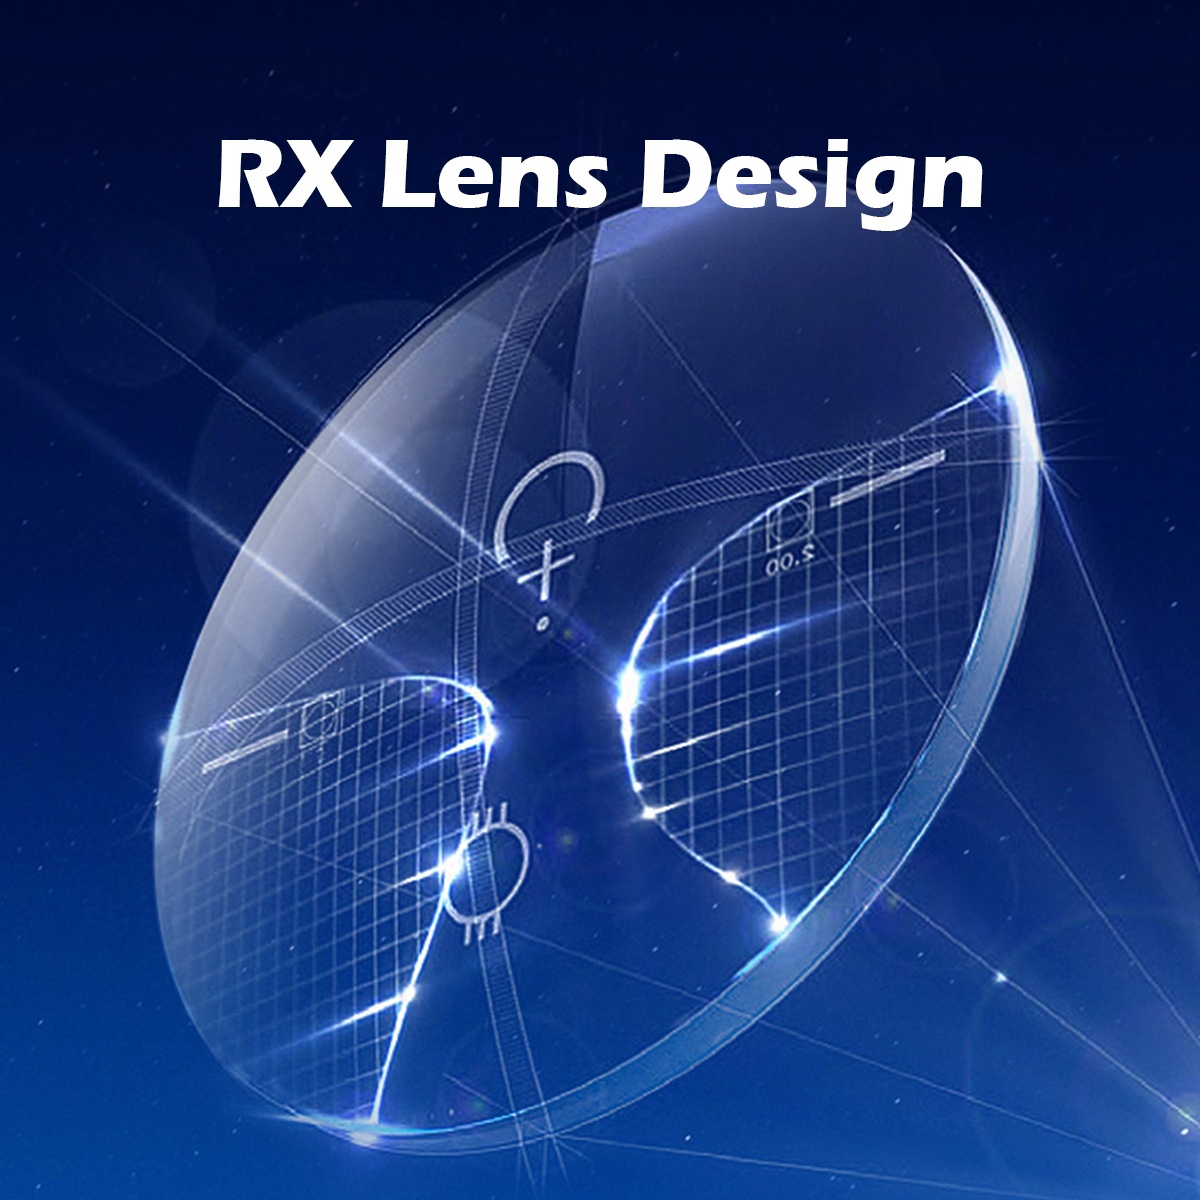 RX Lens Design